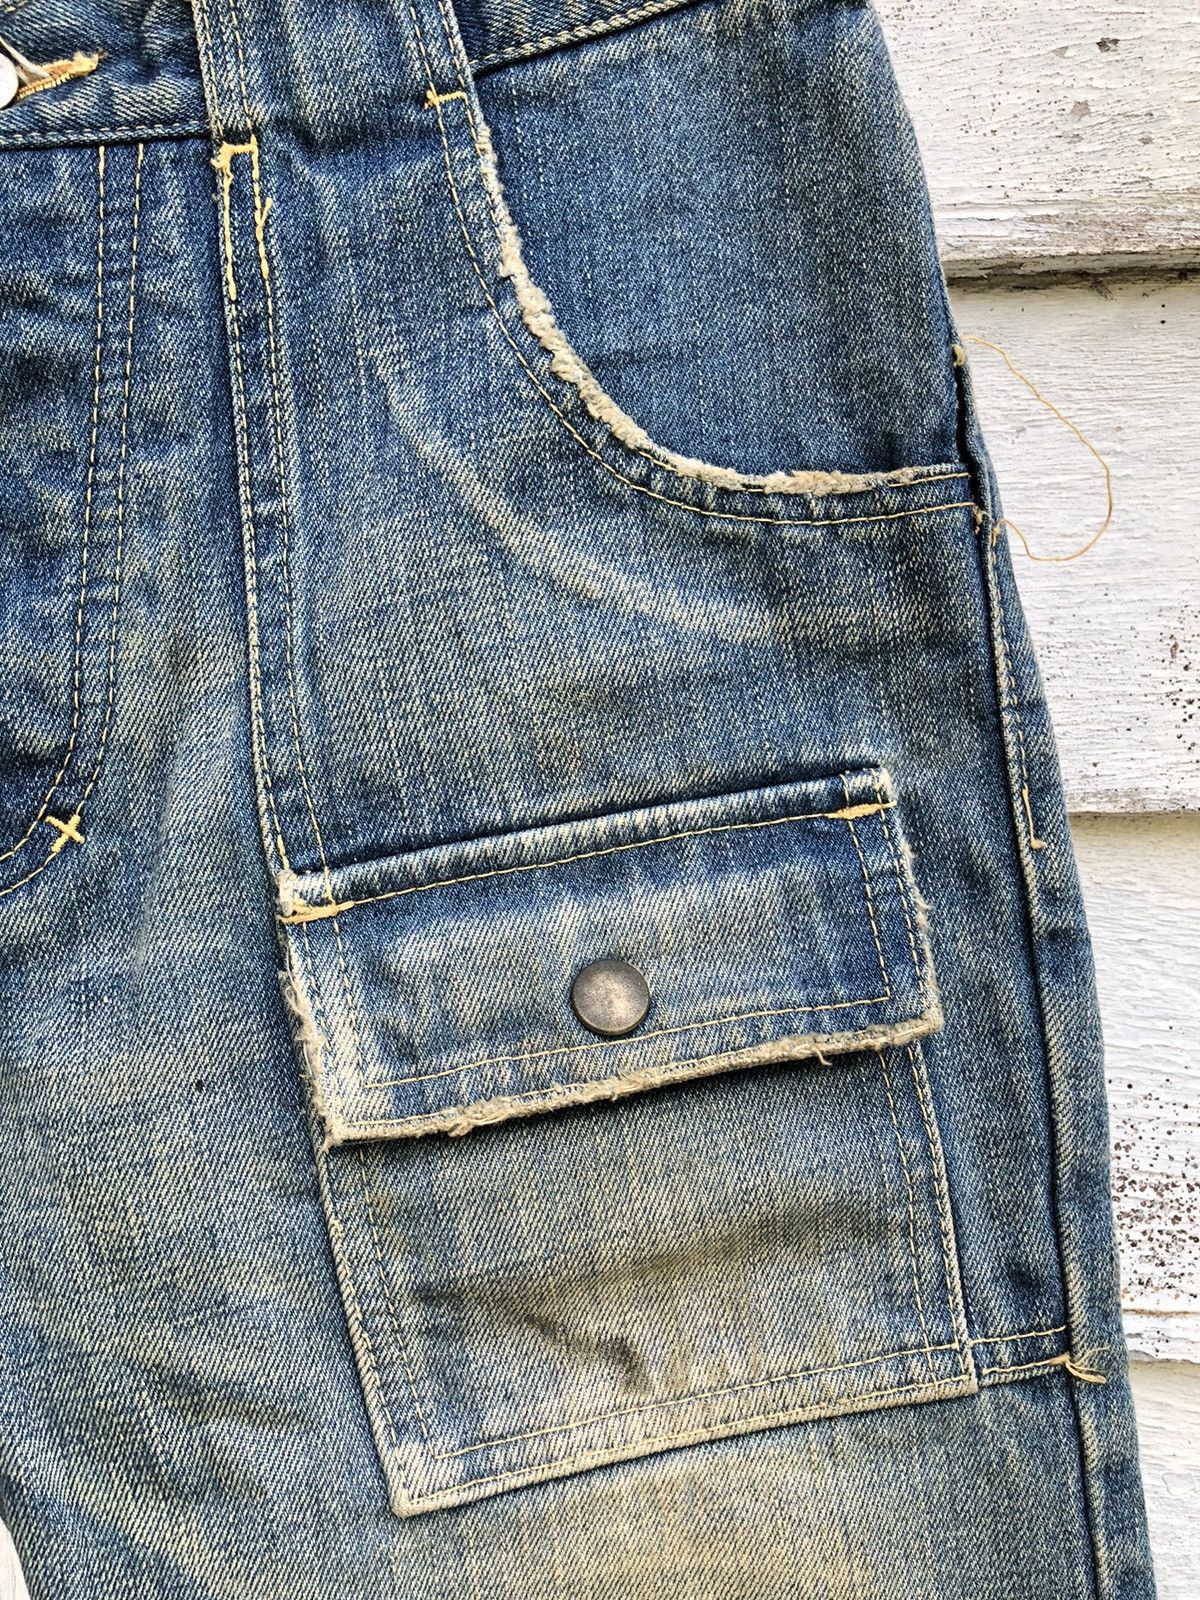 💯Felir💯Discovered Distressed Bush Pocket Pant Jean - 5